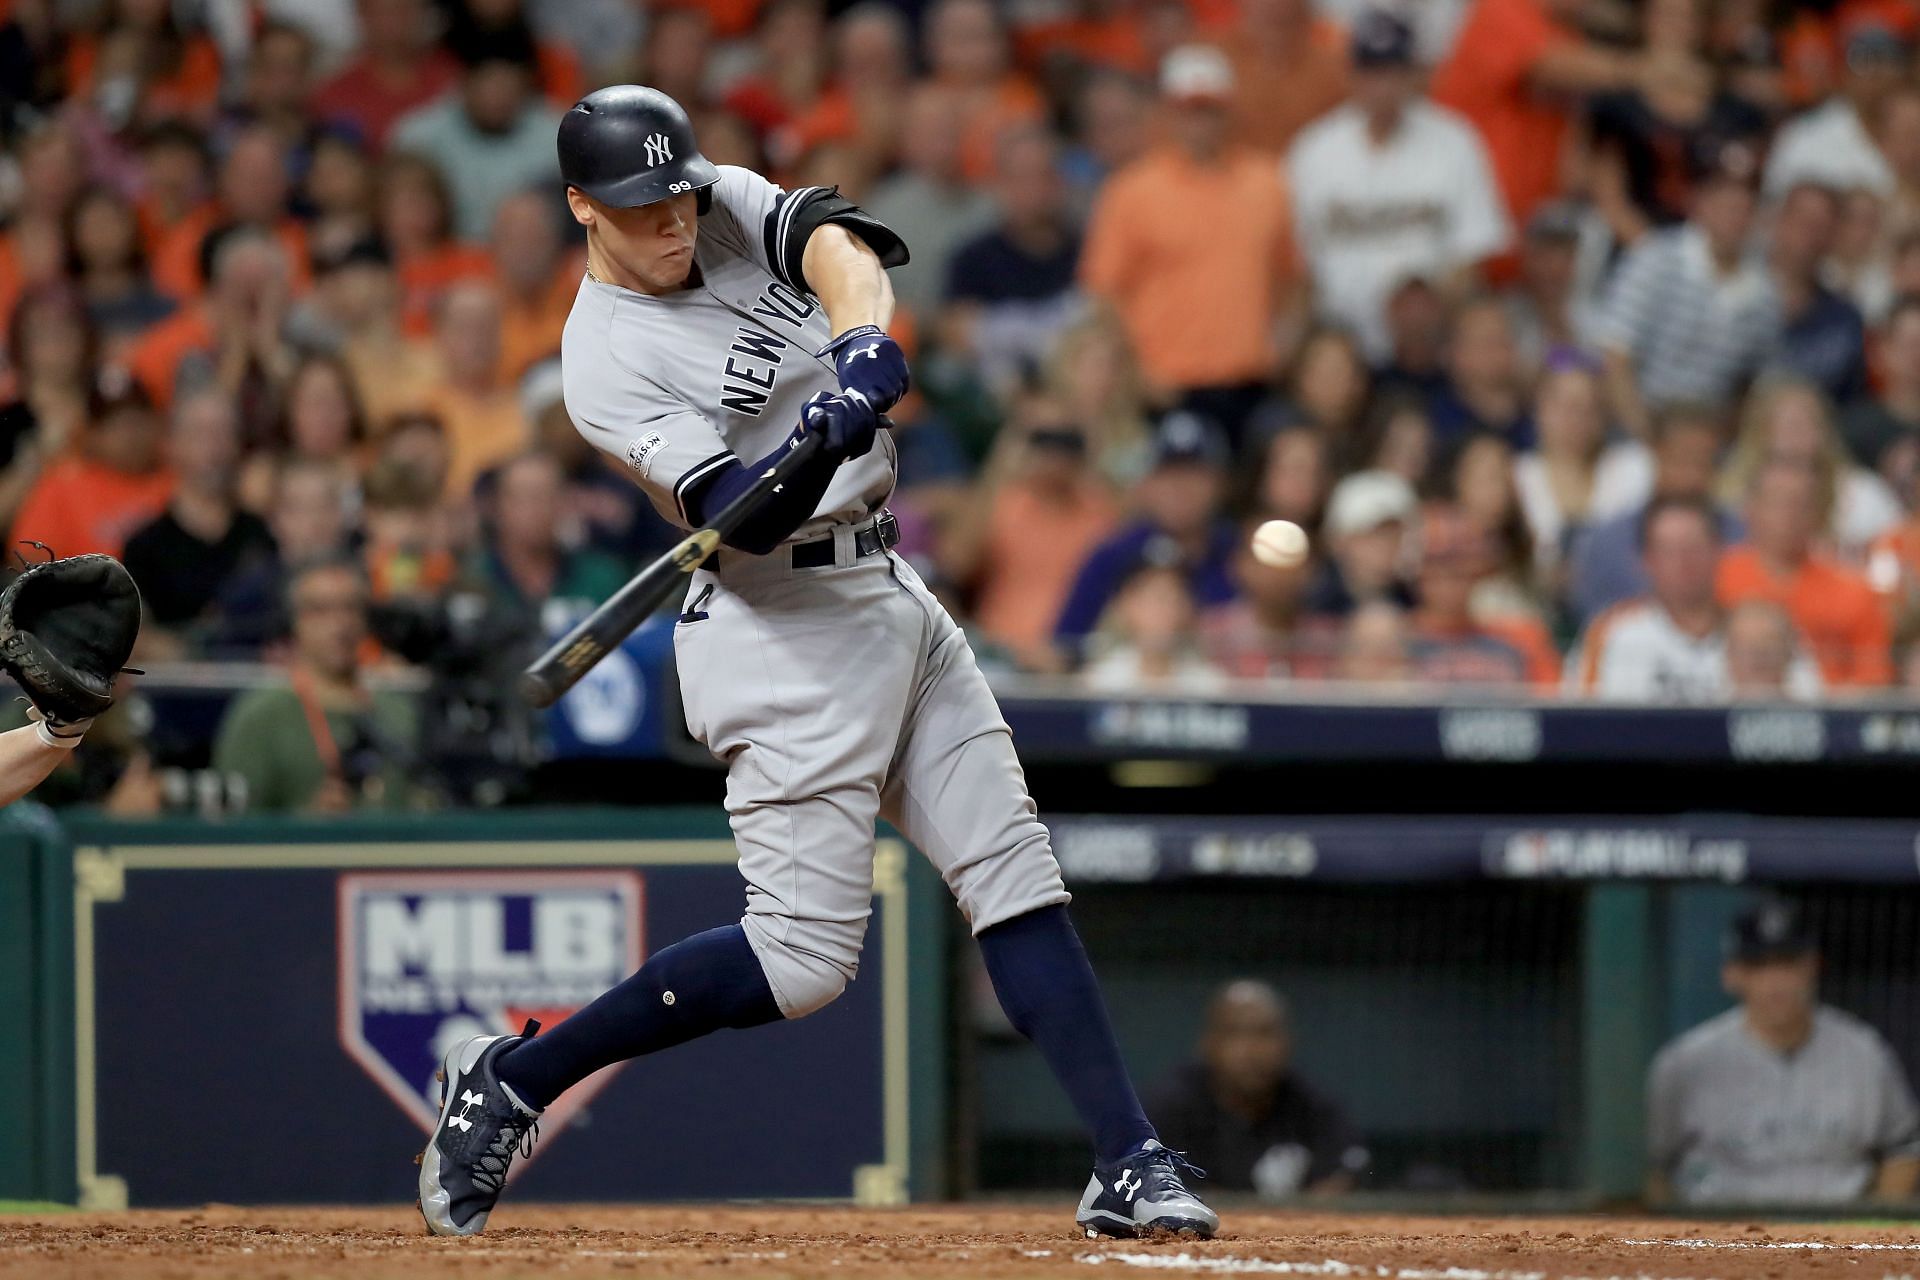 League Championship Series - Yankees superstar Aaron Judge hitting a postseason home run